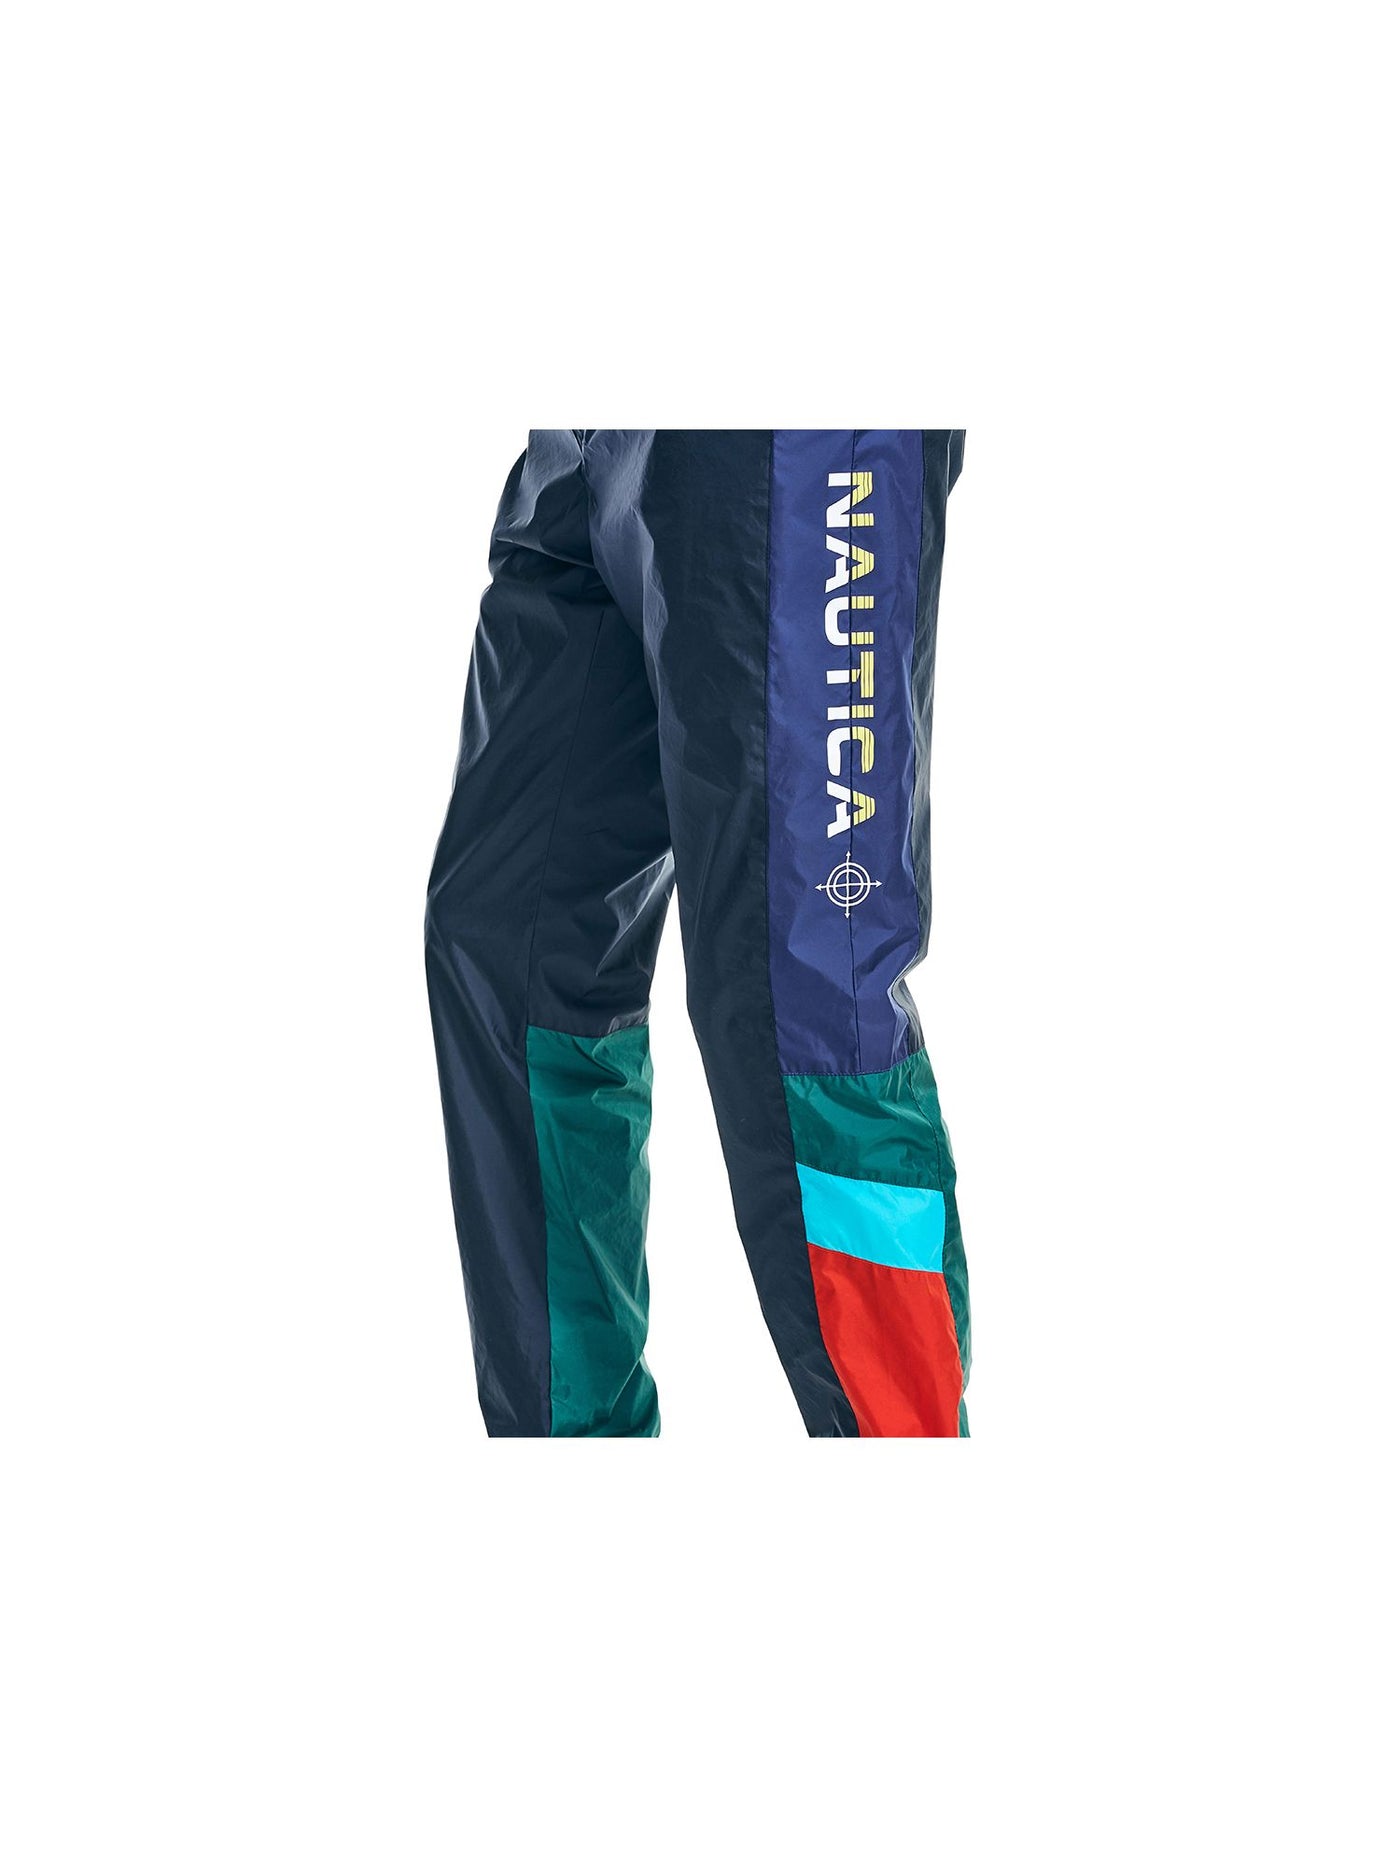 NAUTICA Mens Navy Drawstring, Classic Fit Athletic Pants XL